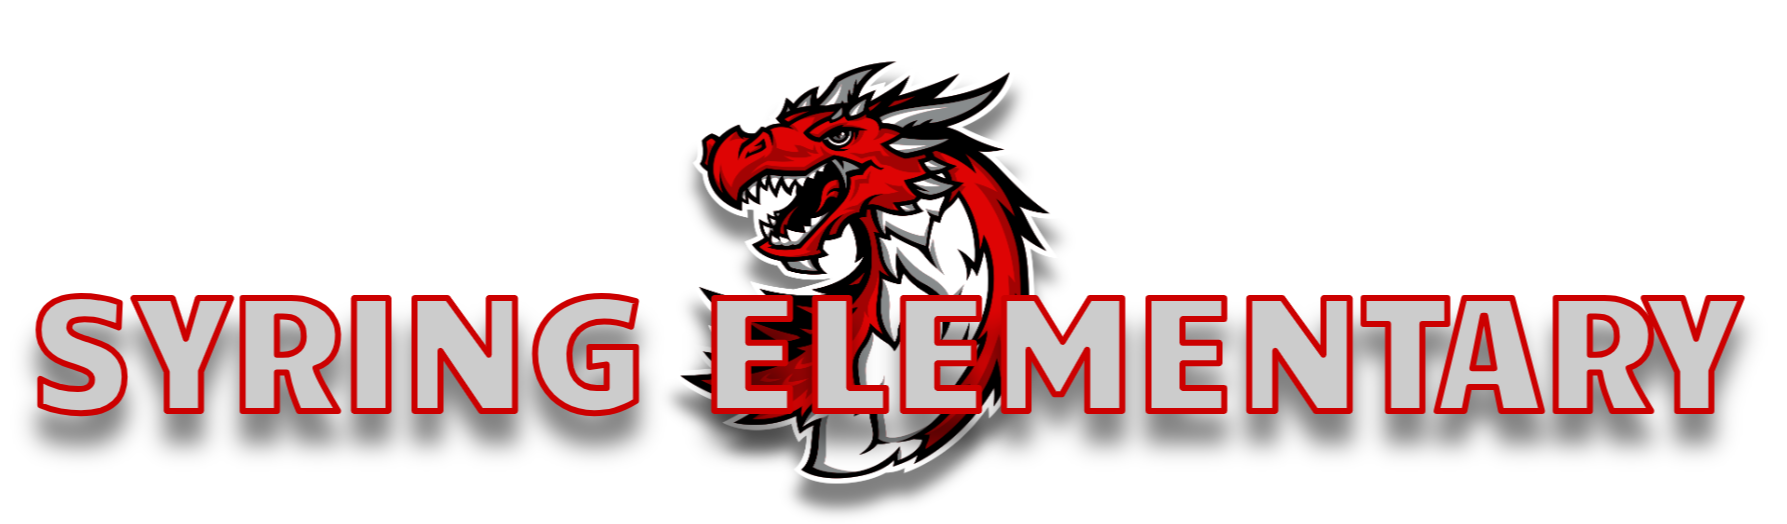 Dragon Logo with School Title Syring Elementary